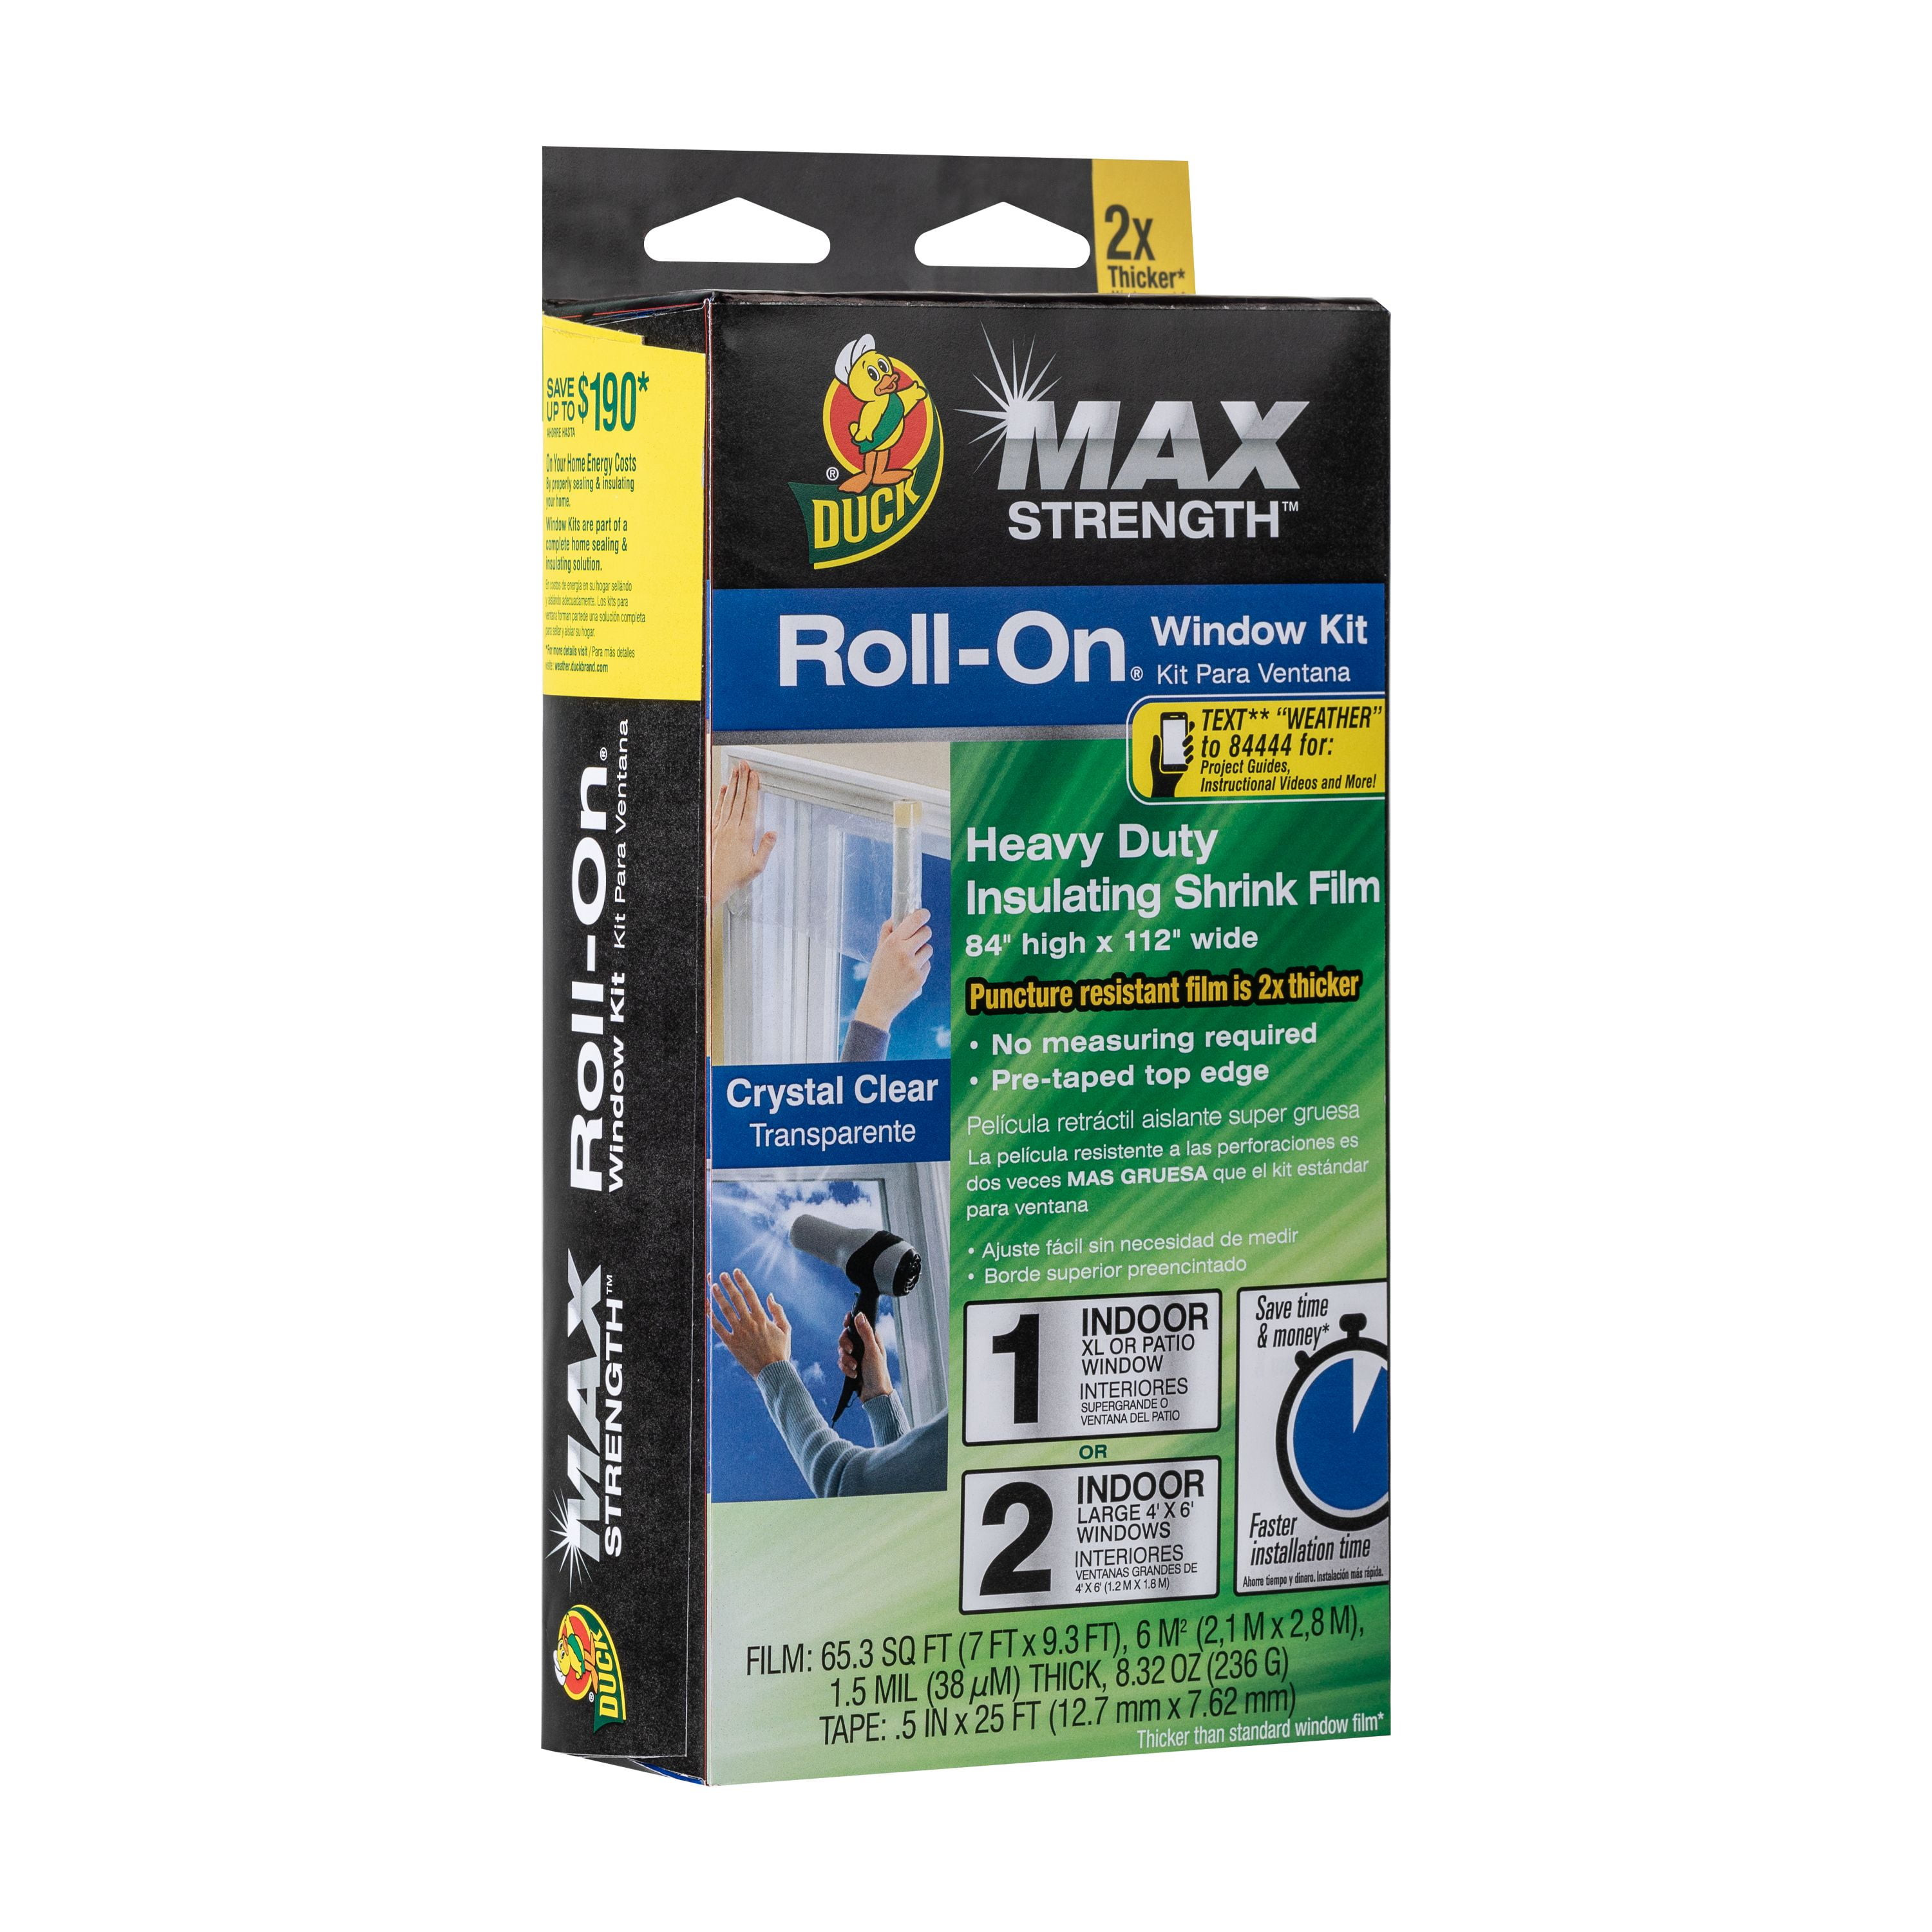 Duck Max Strength Roll-On Window Kit Heavy Duty Insulating Shrink Film 84”x 112” 